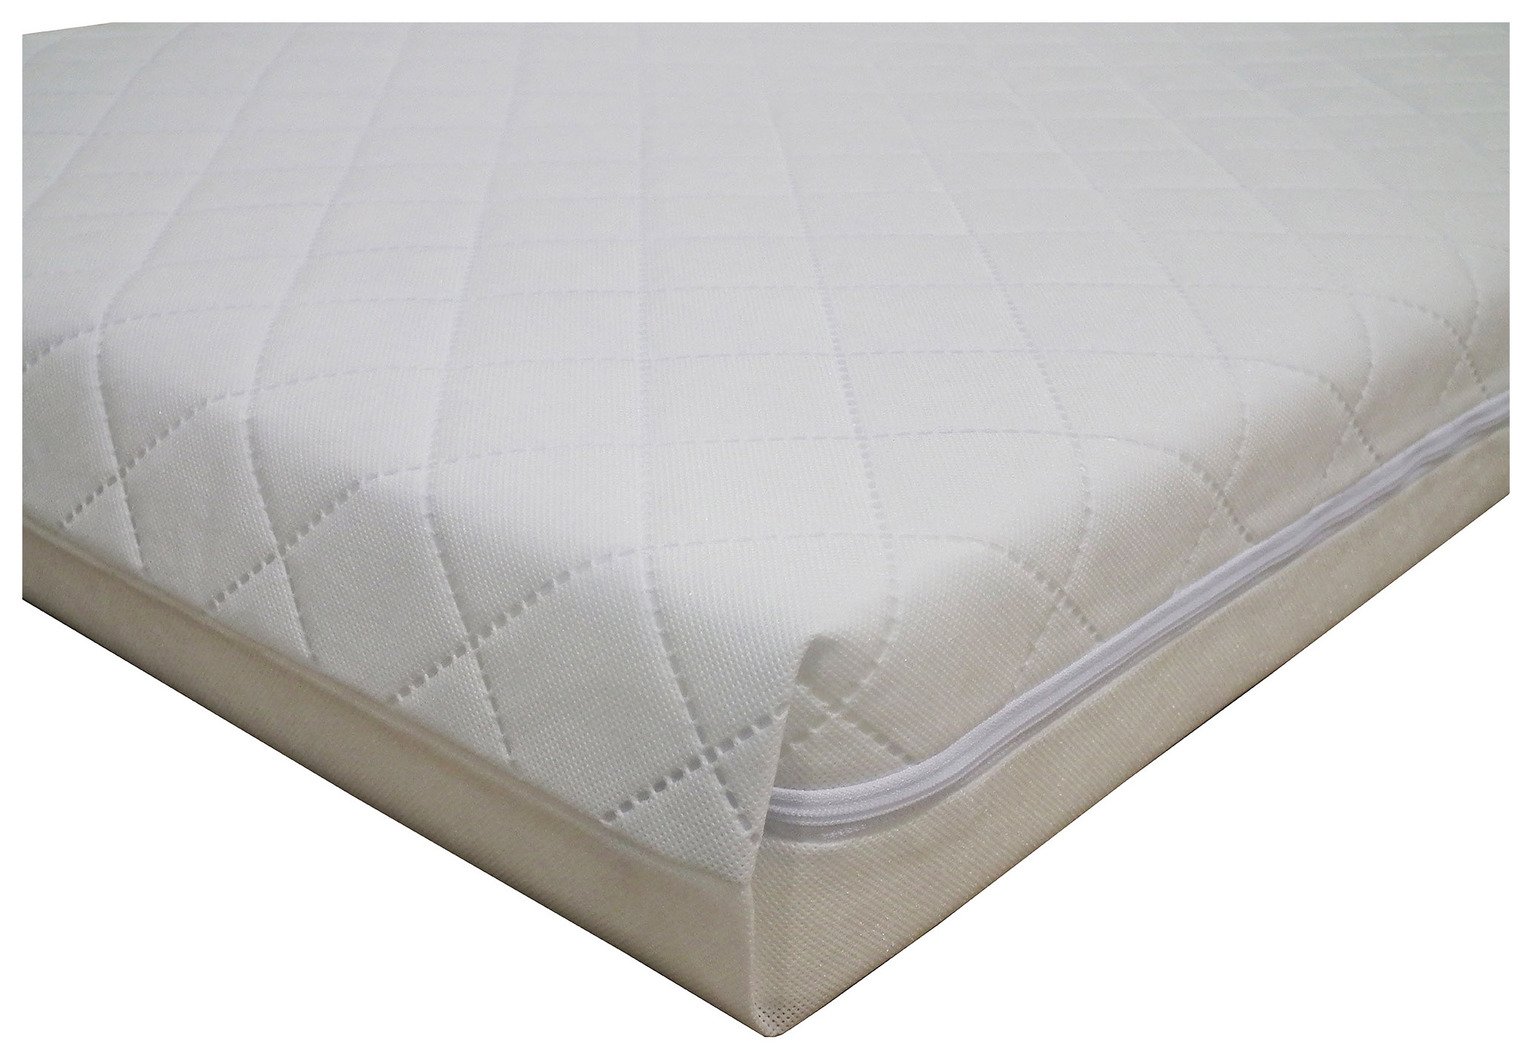 hypoallergenic cot bed mattress